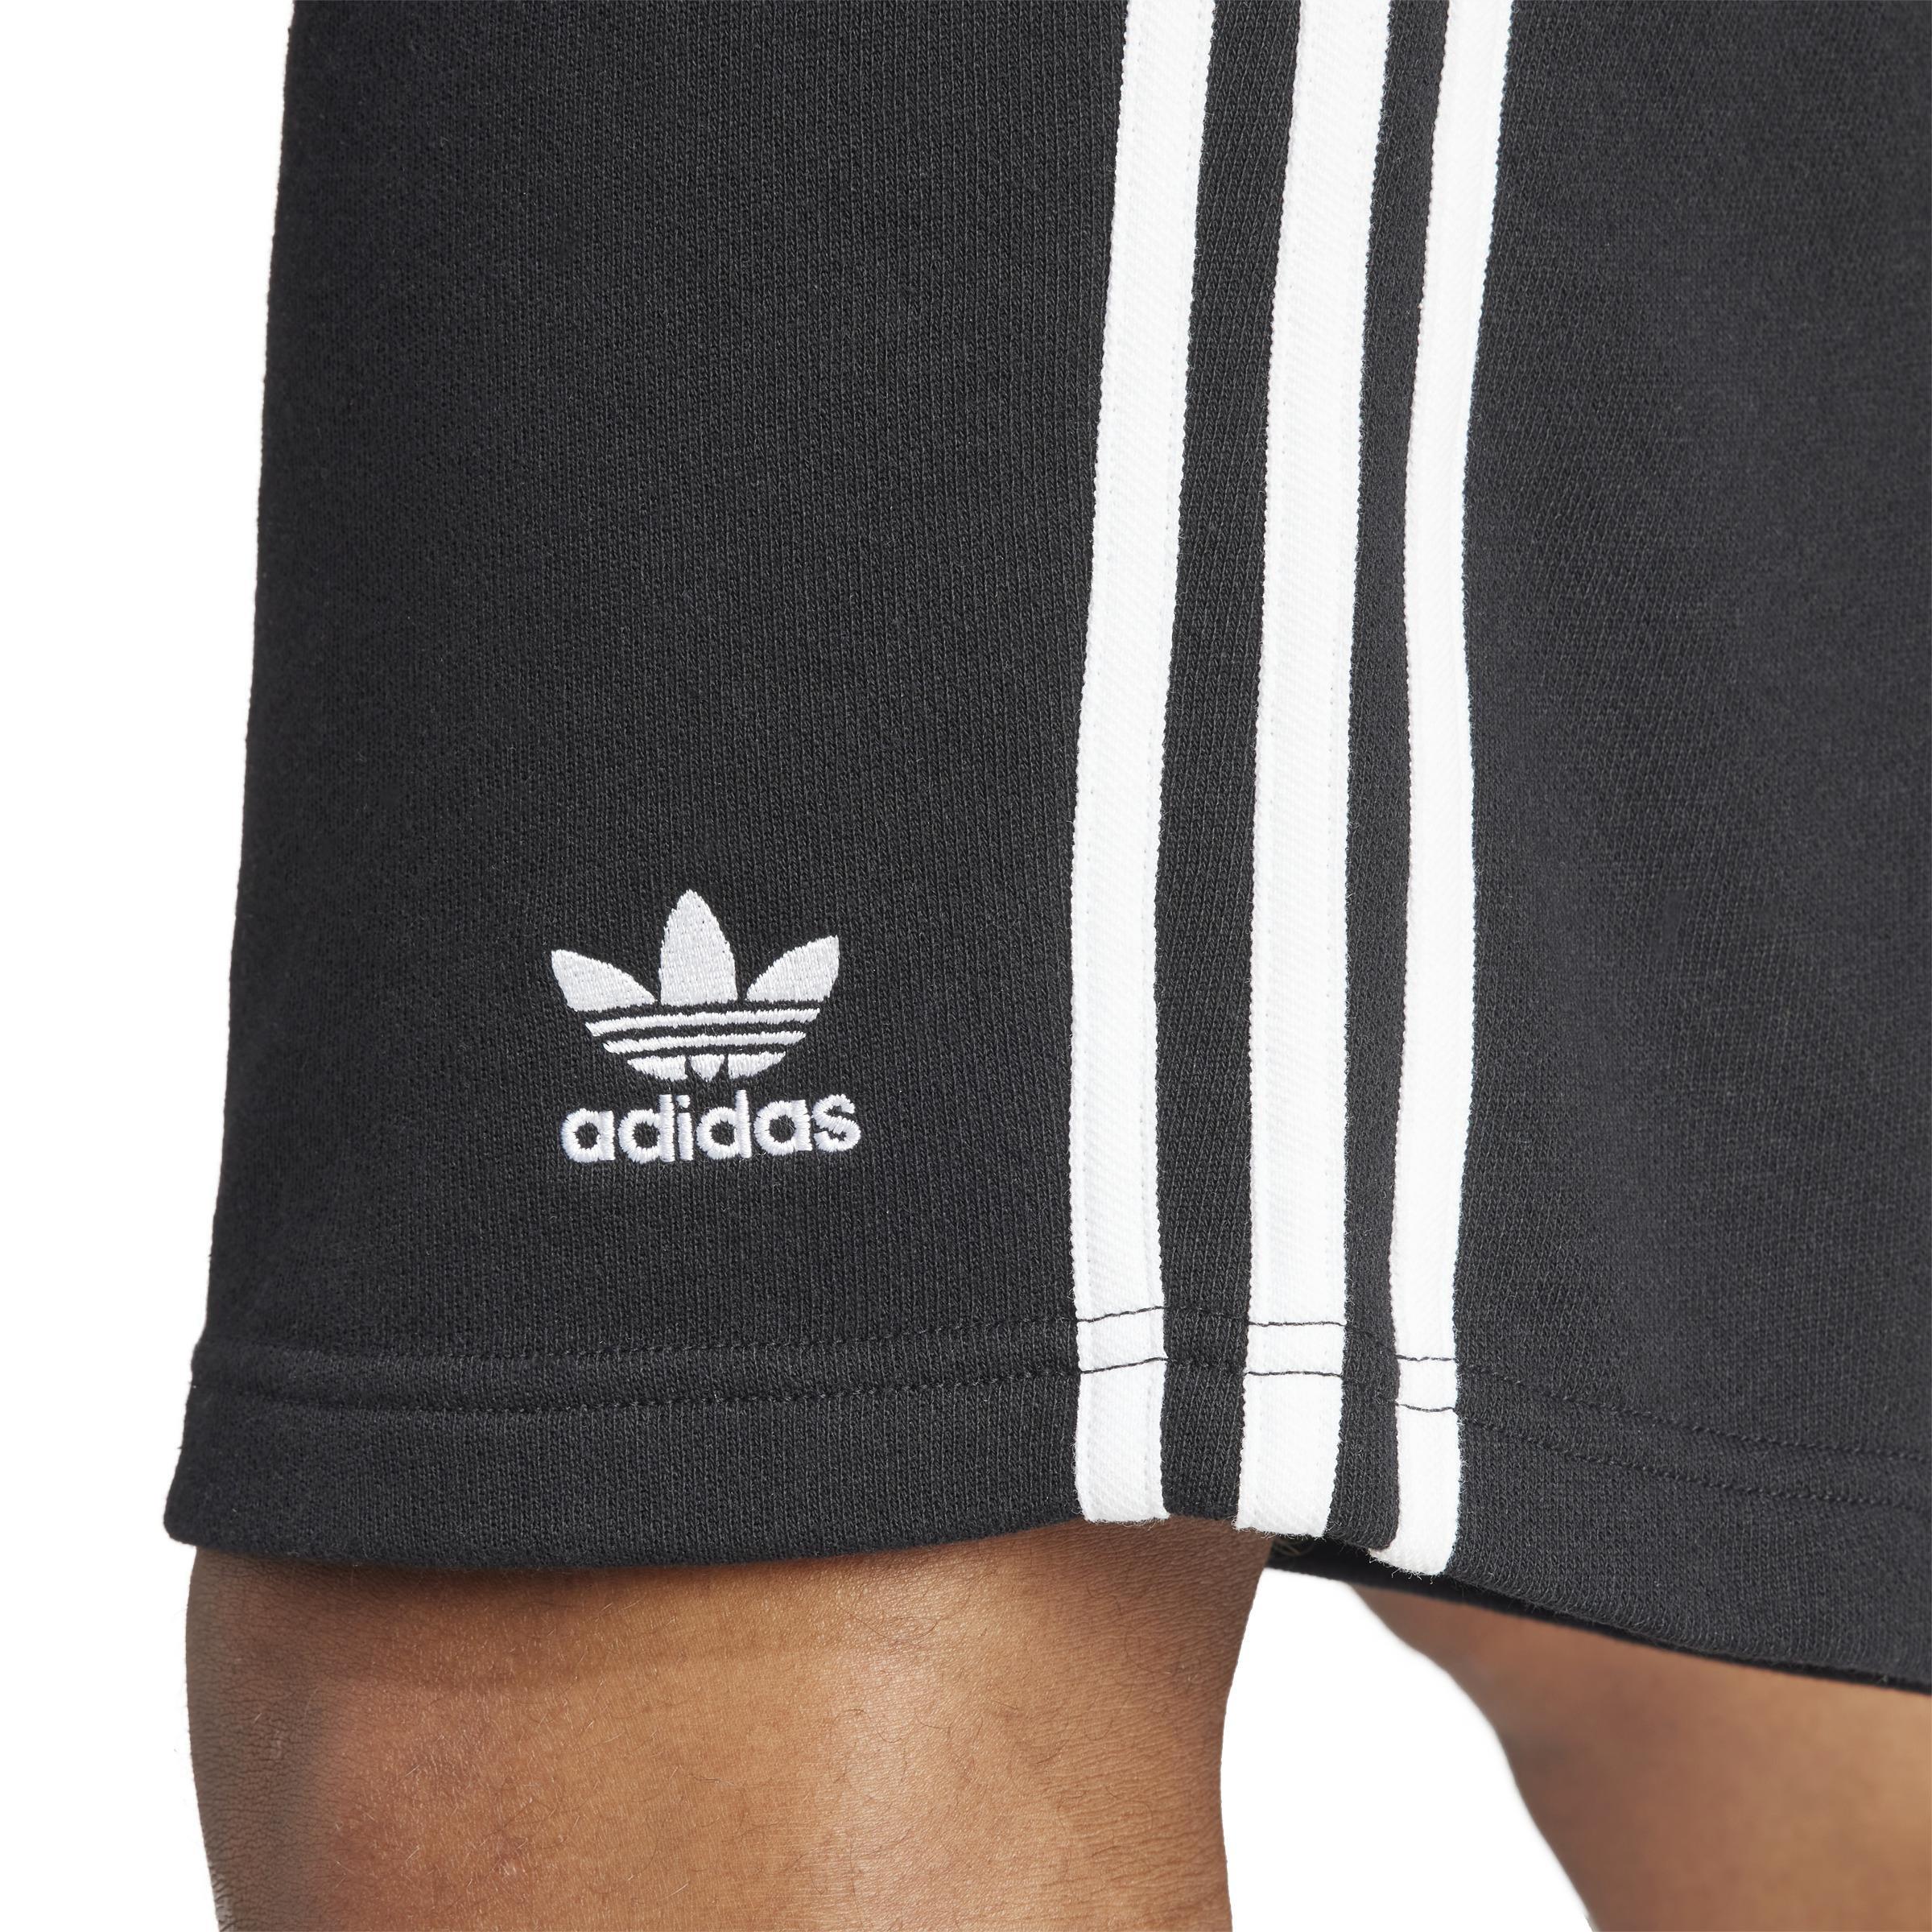 adidas - Men Adicolor 3-Stripes Shorts, Black